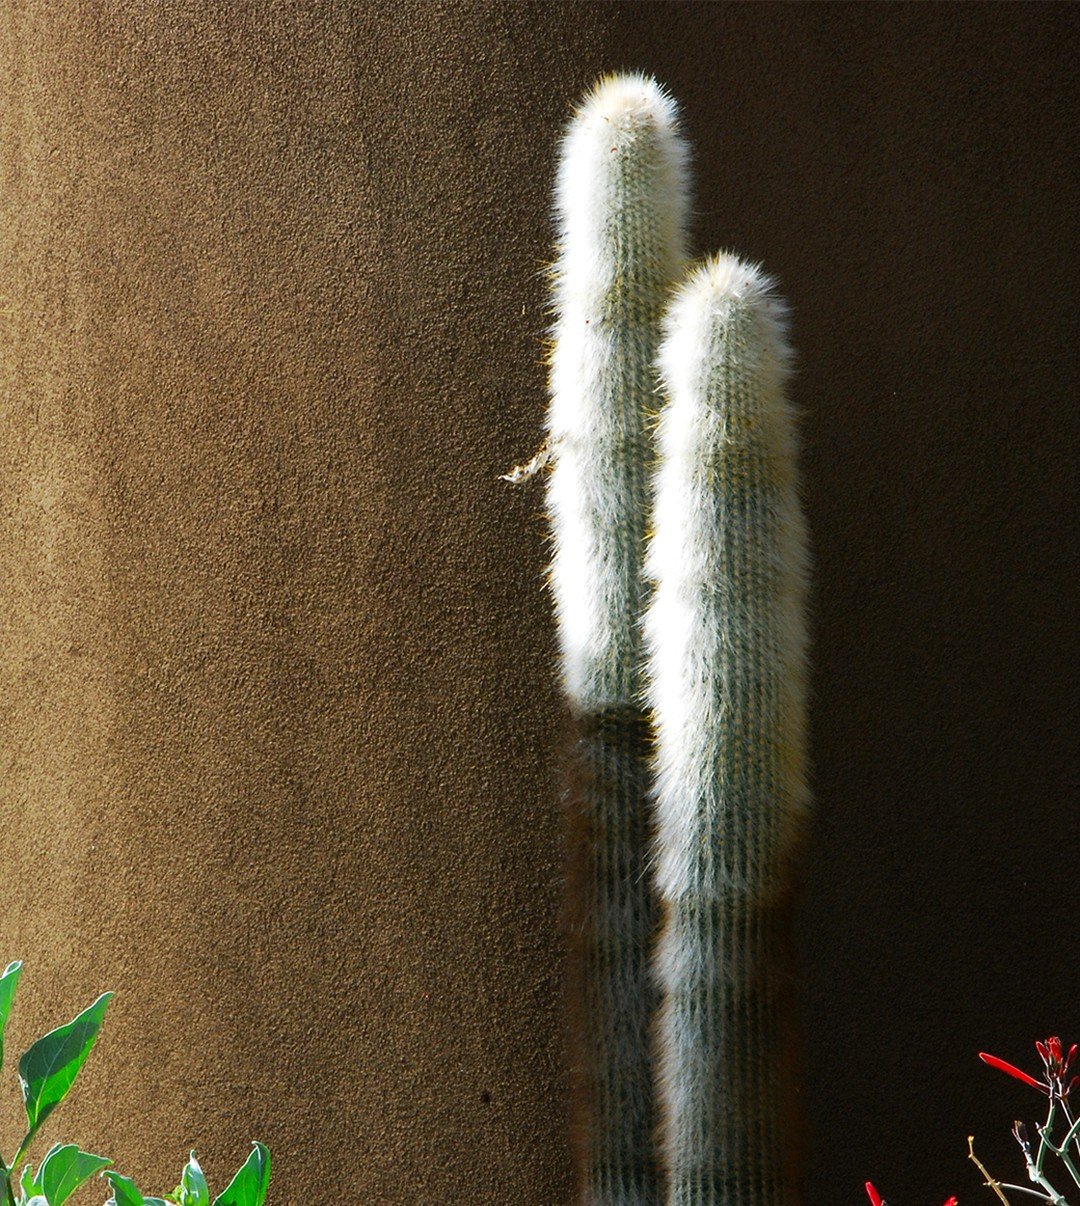 Cactus at the Palo Cristi Garden. PV Arizona